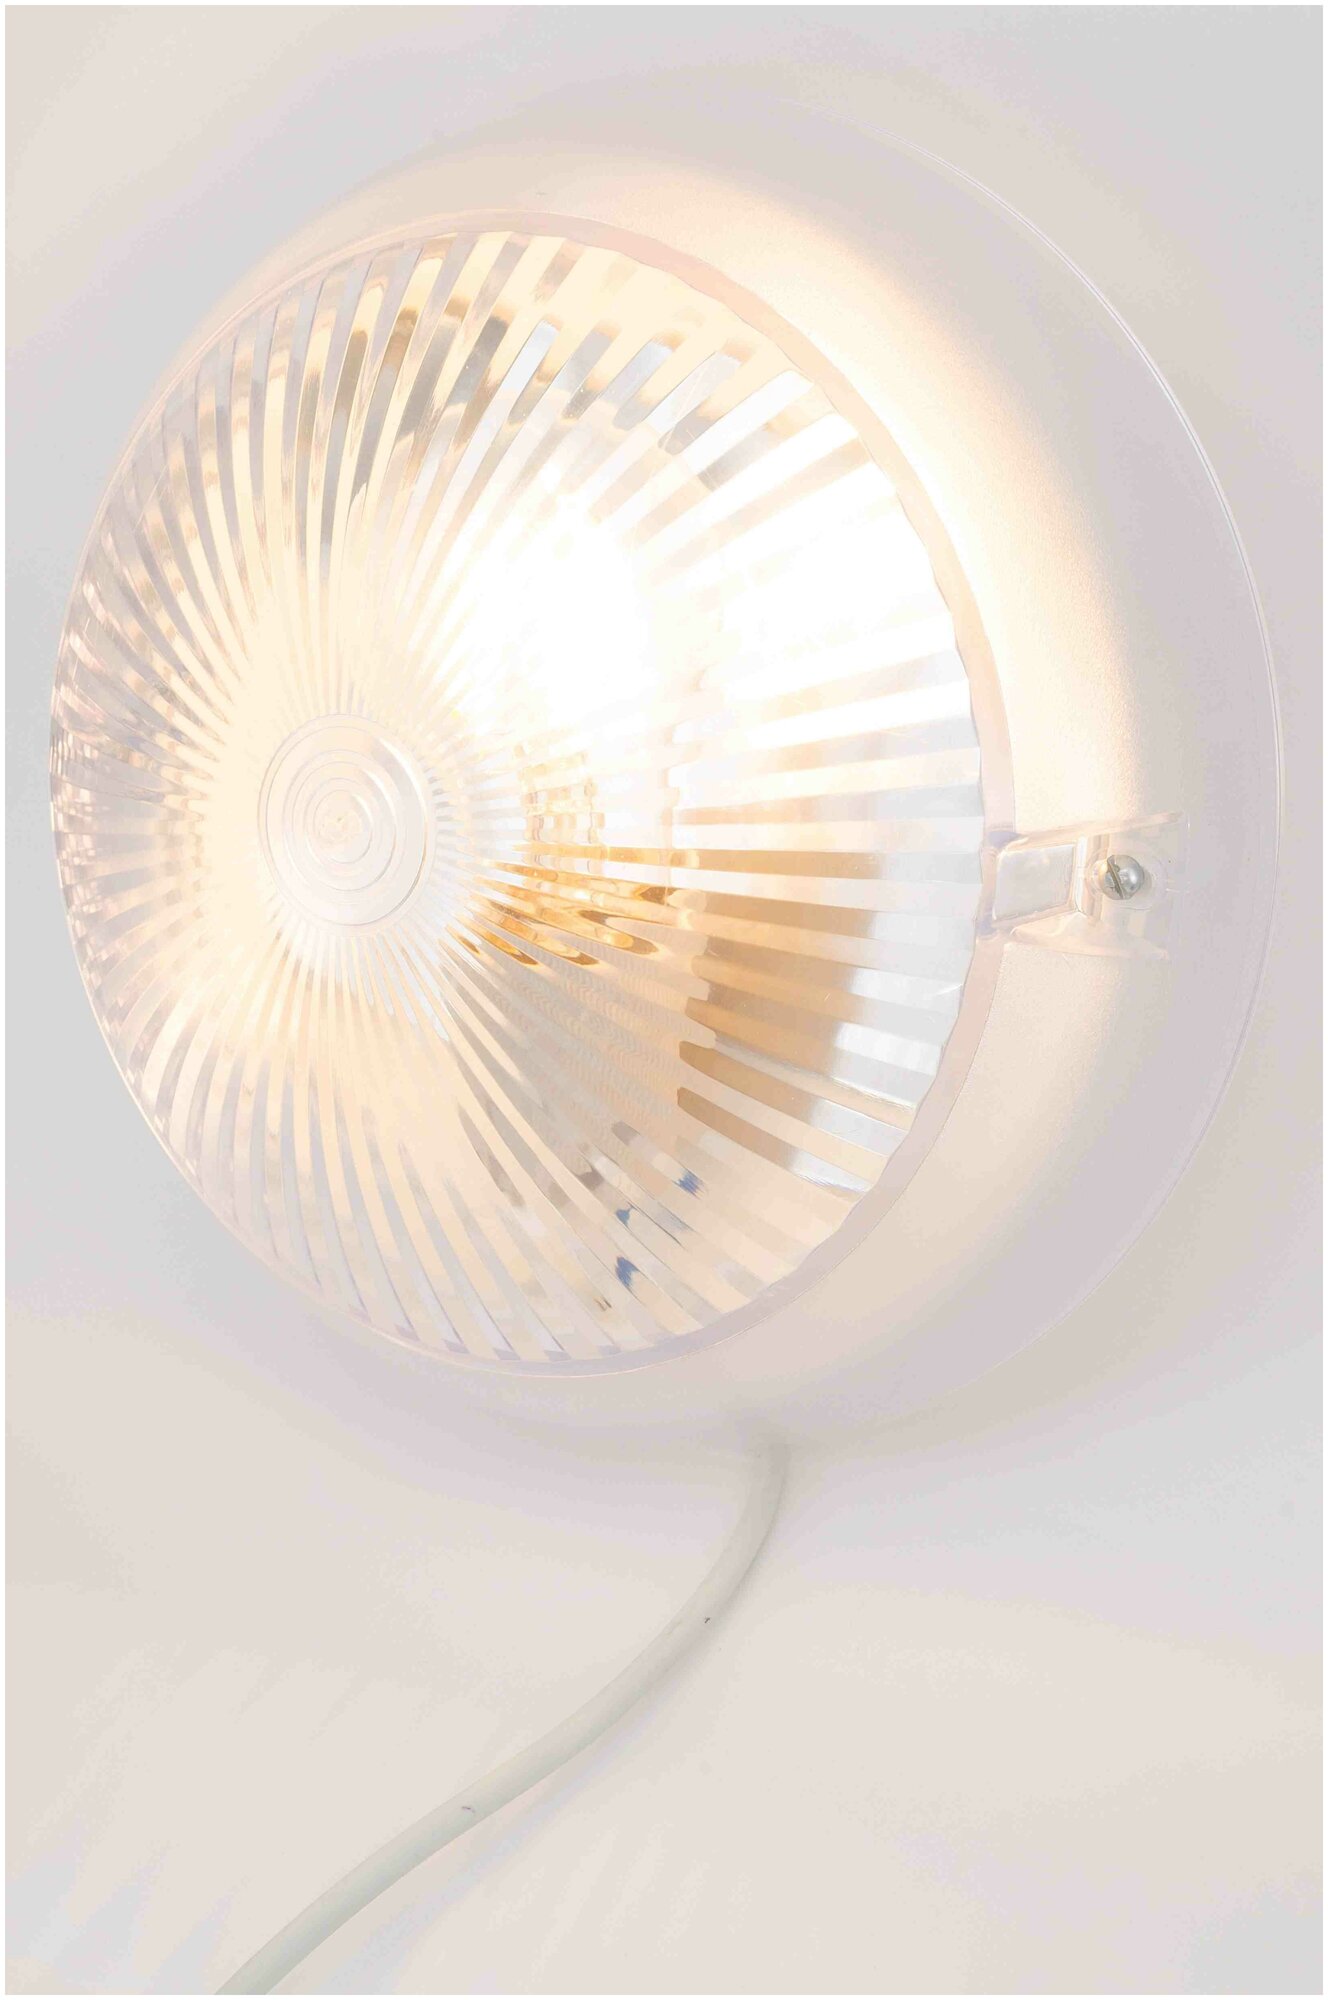 Настенно-потолочный светильник Apeyron Сириус НБП 06-60-001 в форме круга, цвет белый, 60 Вт, IP54, цоколь E27, 220х220х105 мм.